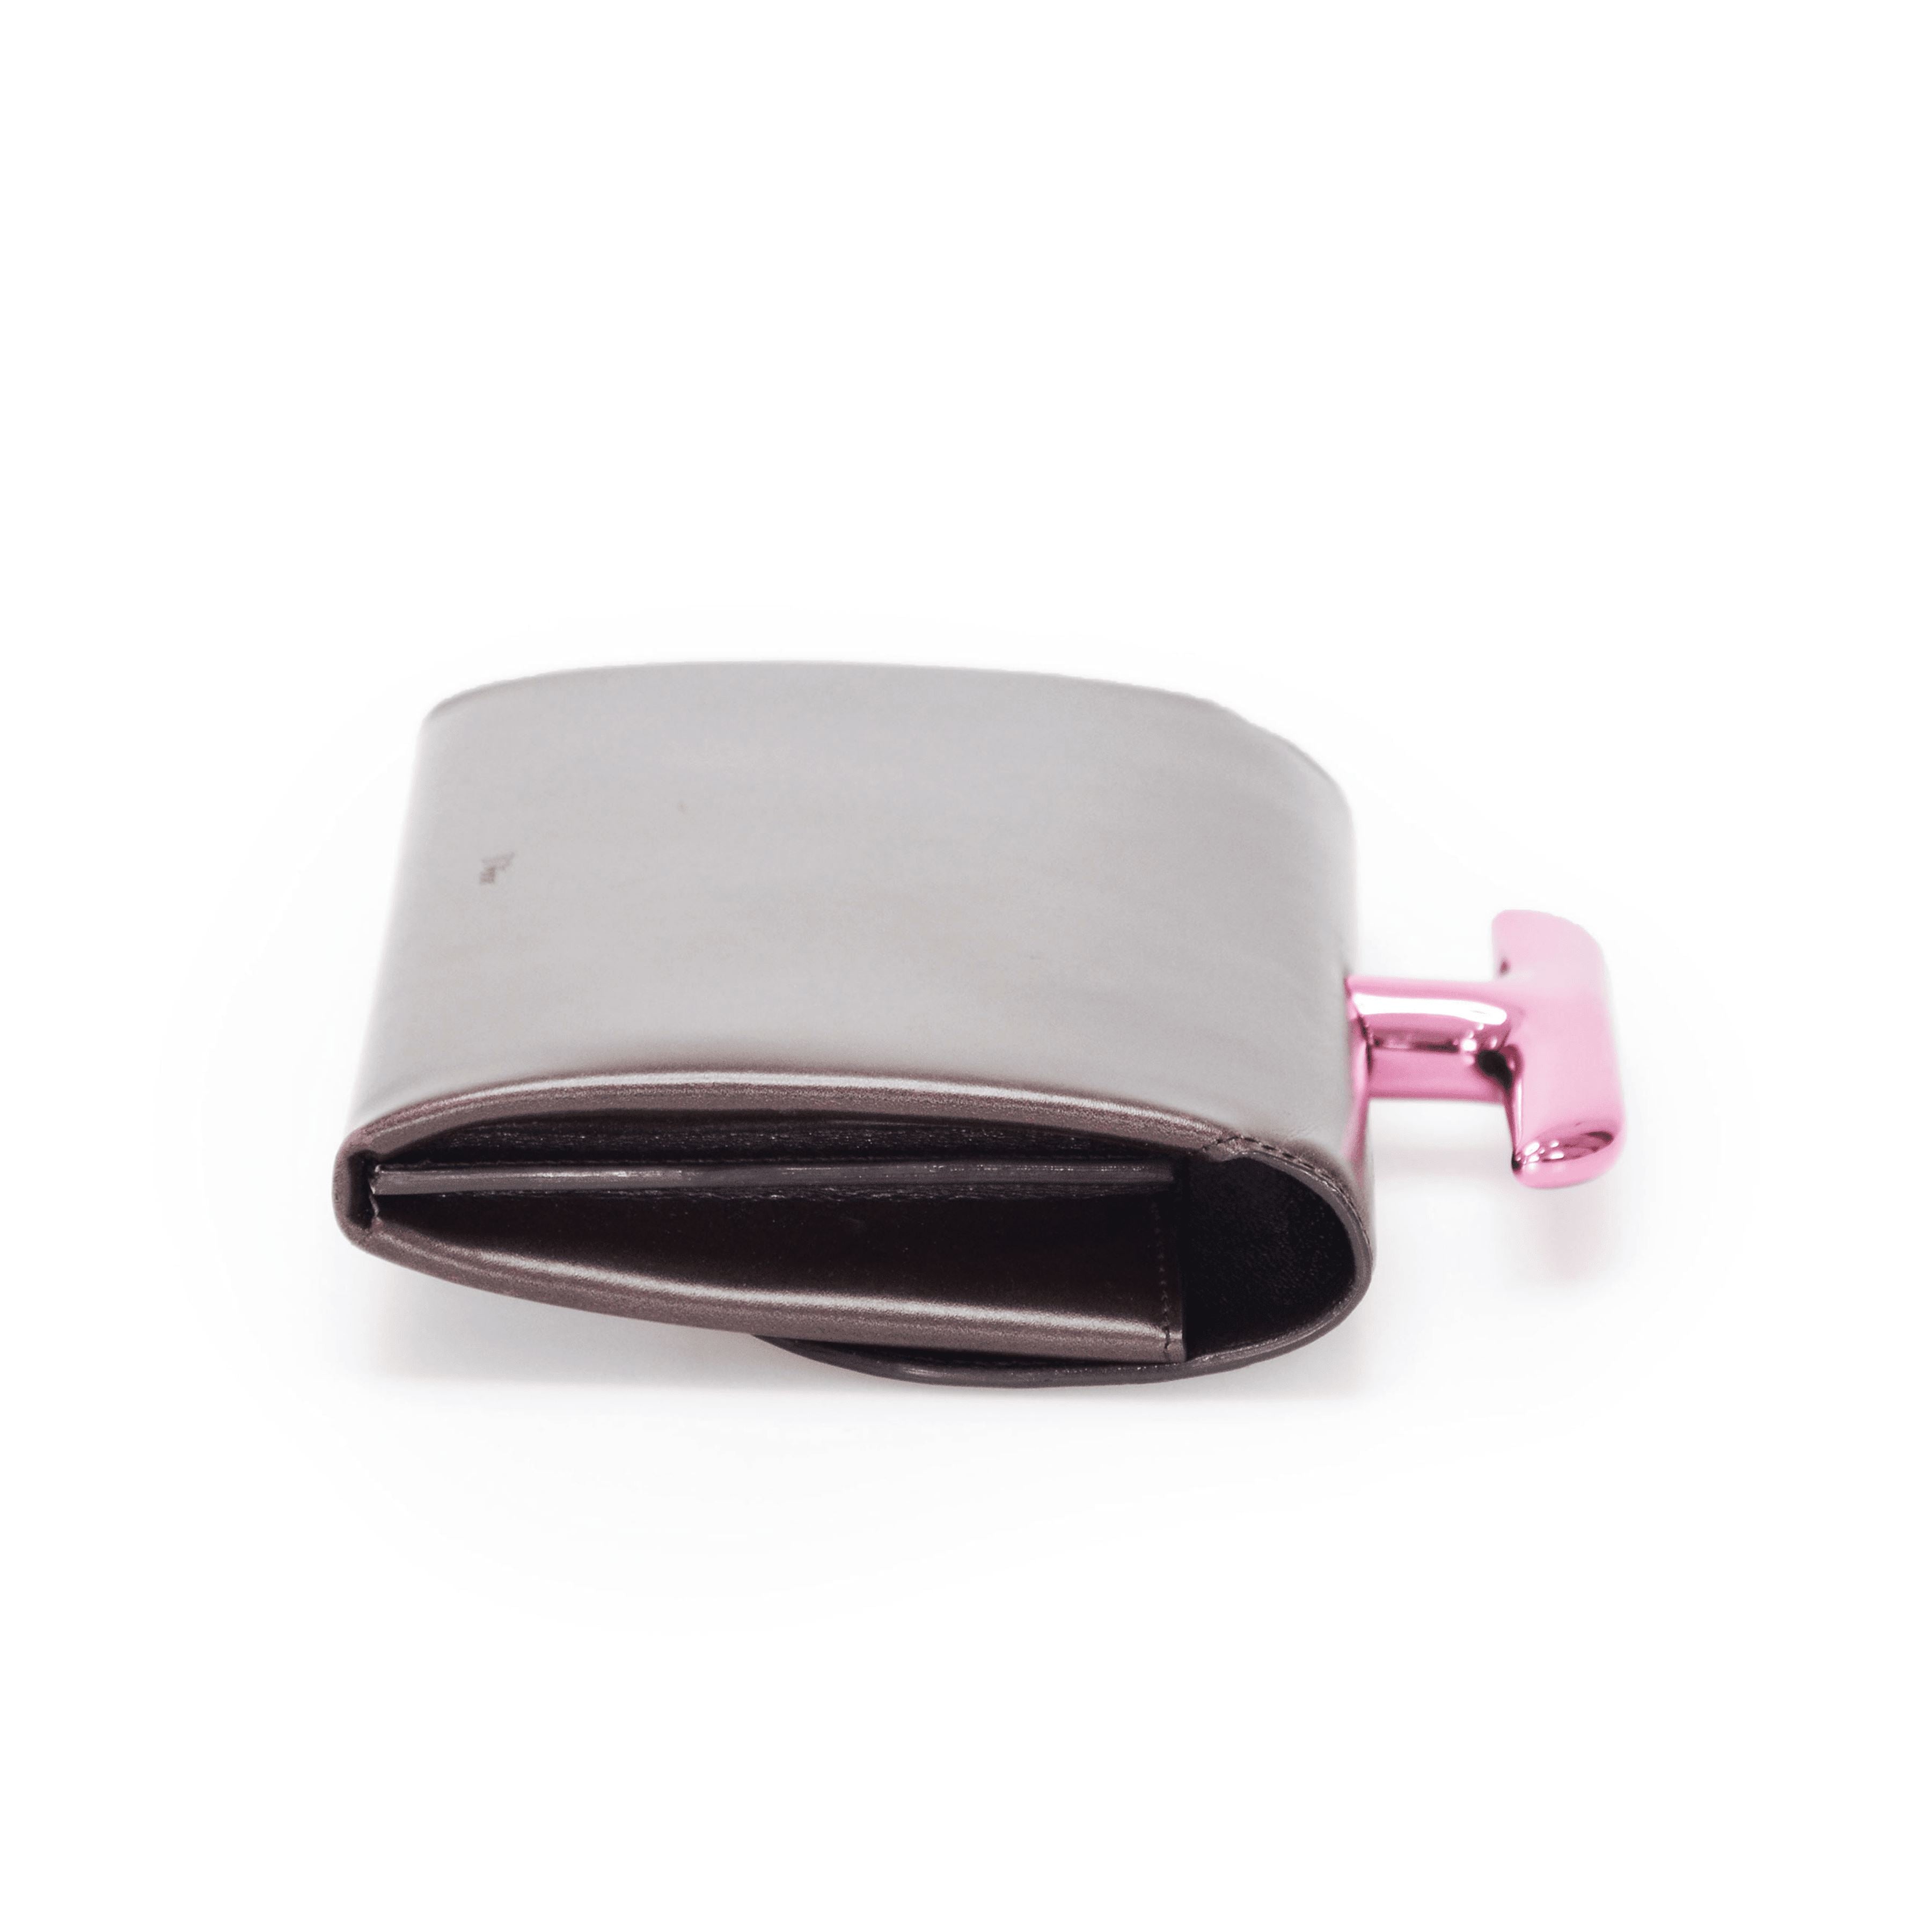 Dior Dark Chocolate Leather Small Handbag Bag Christian Dior 